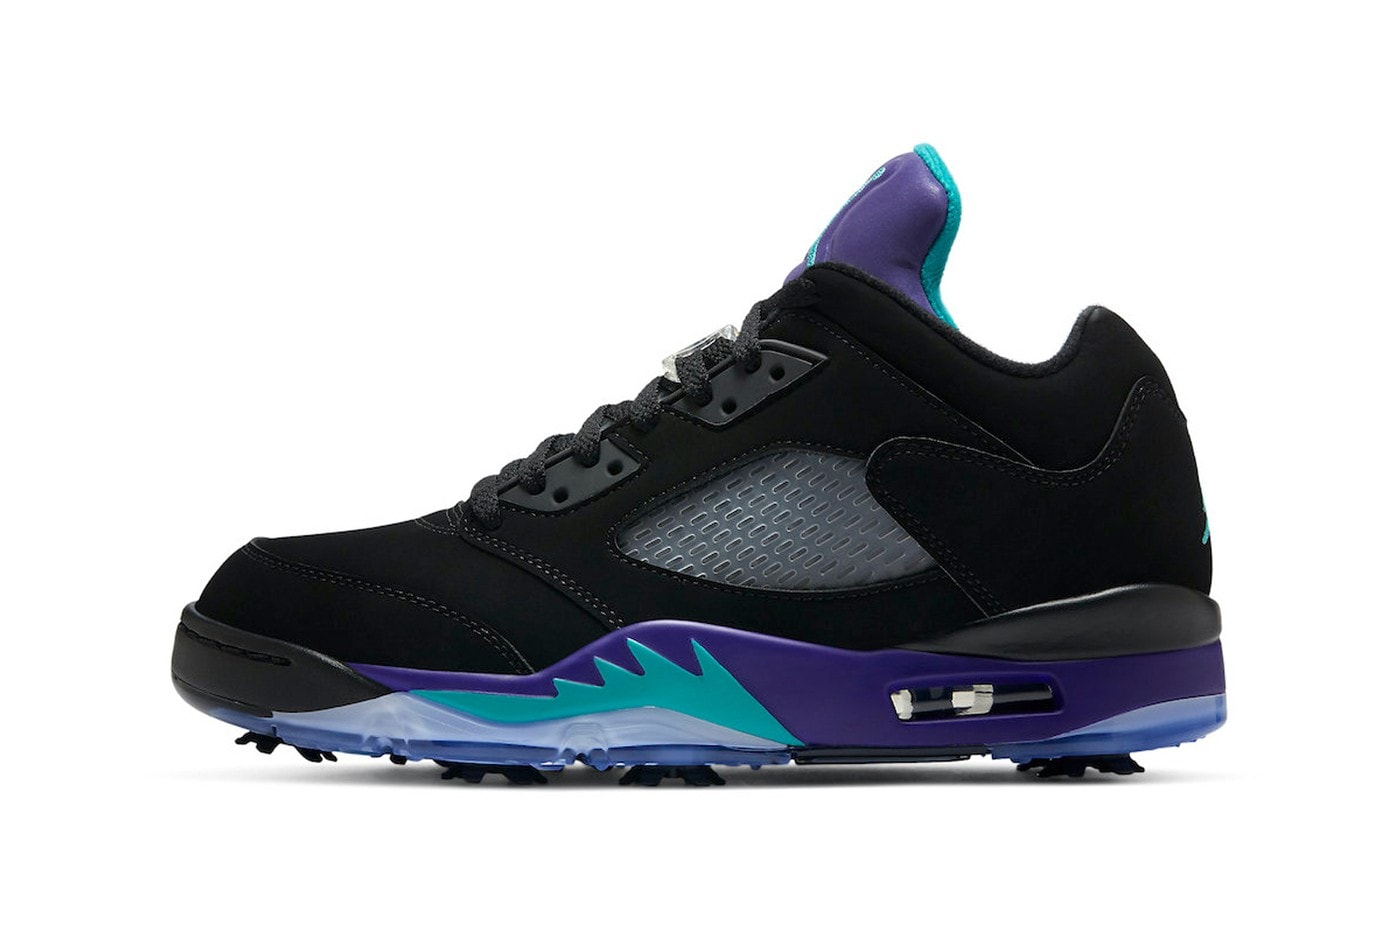 Air Jordan 5 Low 人氣配色「Black Grape」推出高爾夫球版本鞋款